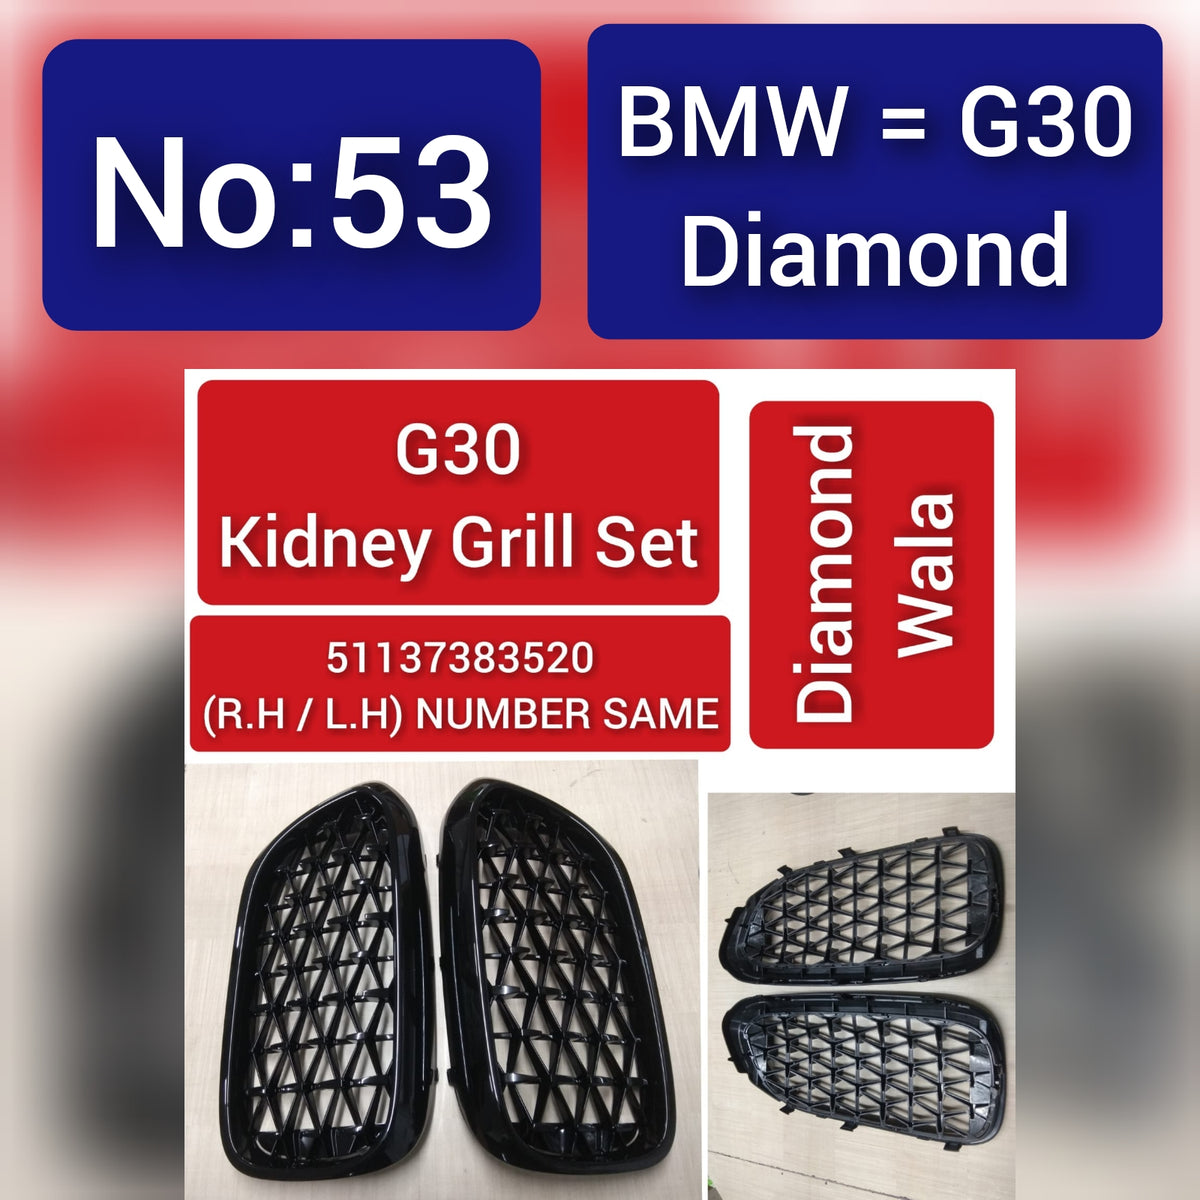 BMW = G30 Diamond G30 Kidney Grill Set 51137383520 (R.H/L.H) NUMBER SAME Diamond Wala Tag 53